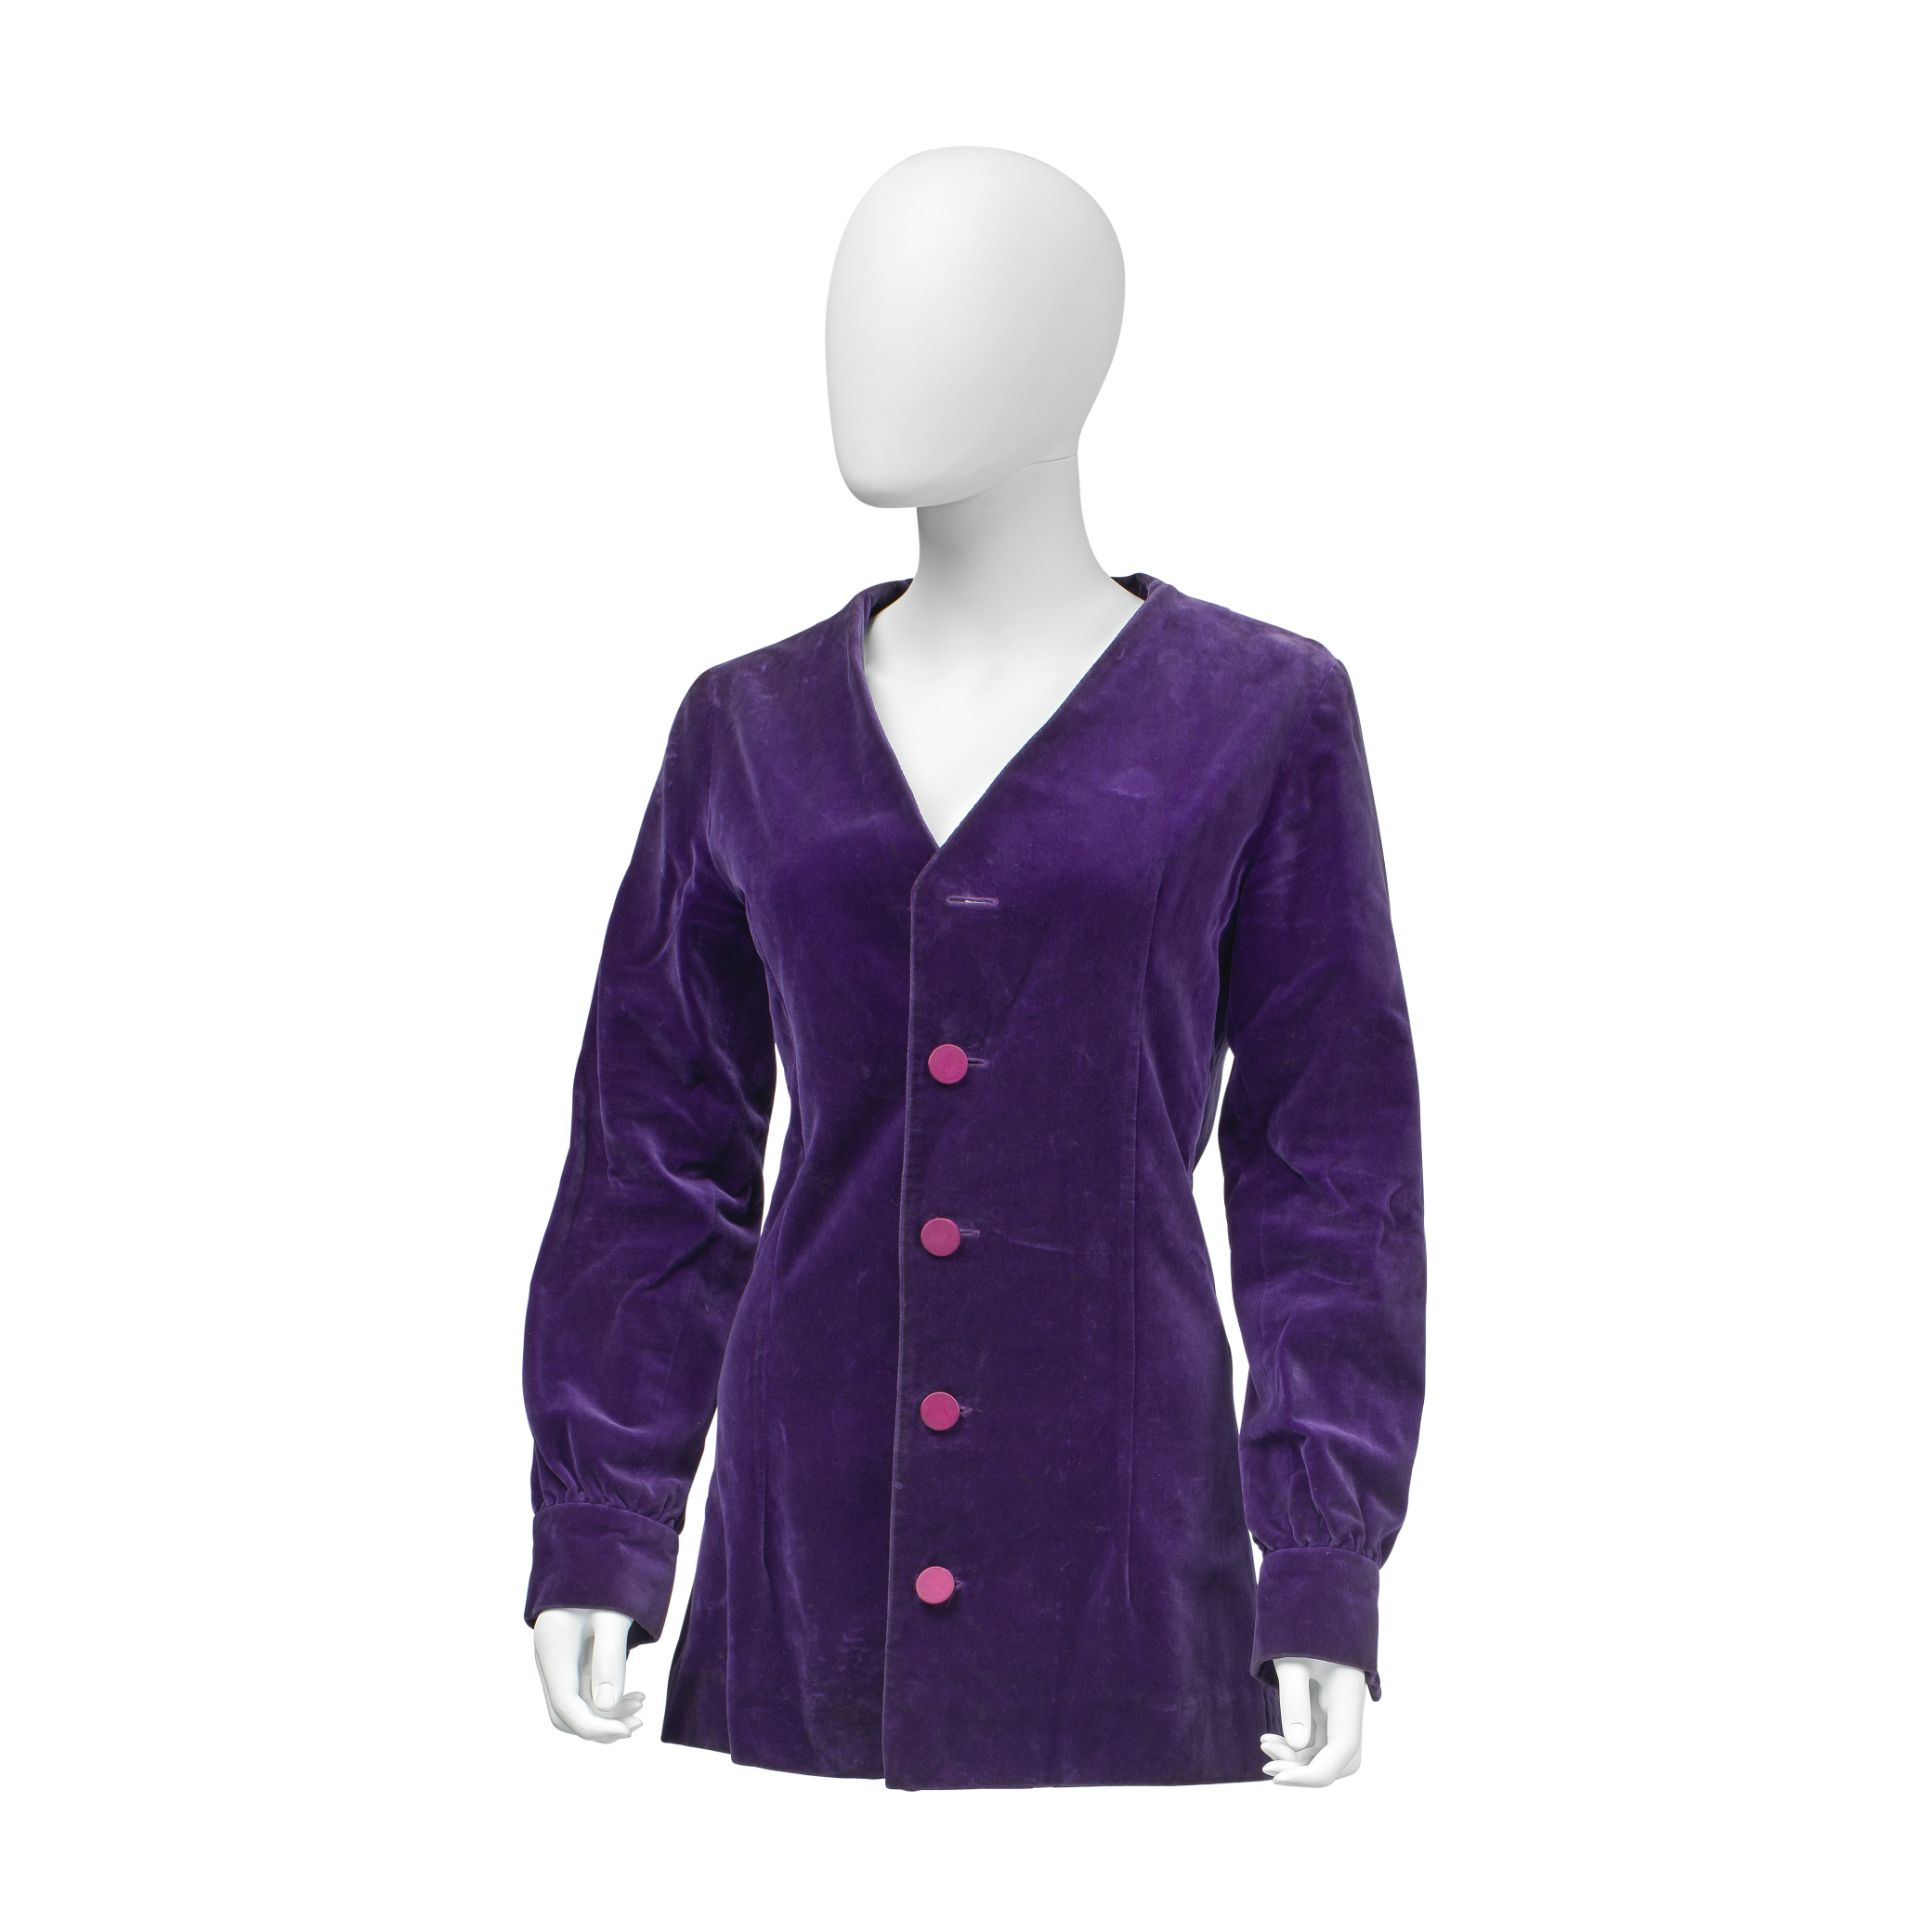 Apple Boutique (1967-1968) Purple Velvet Frock Coat, circa 1967/68